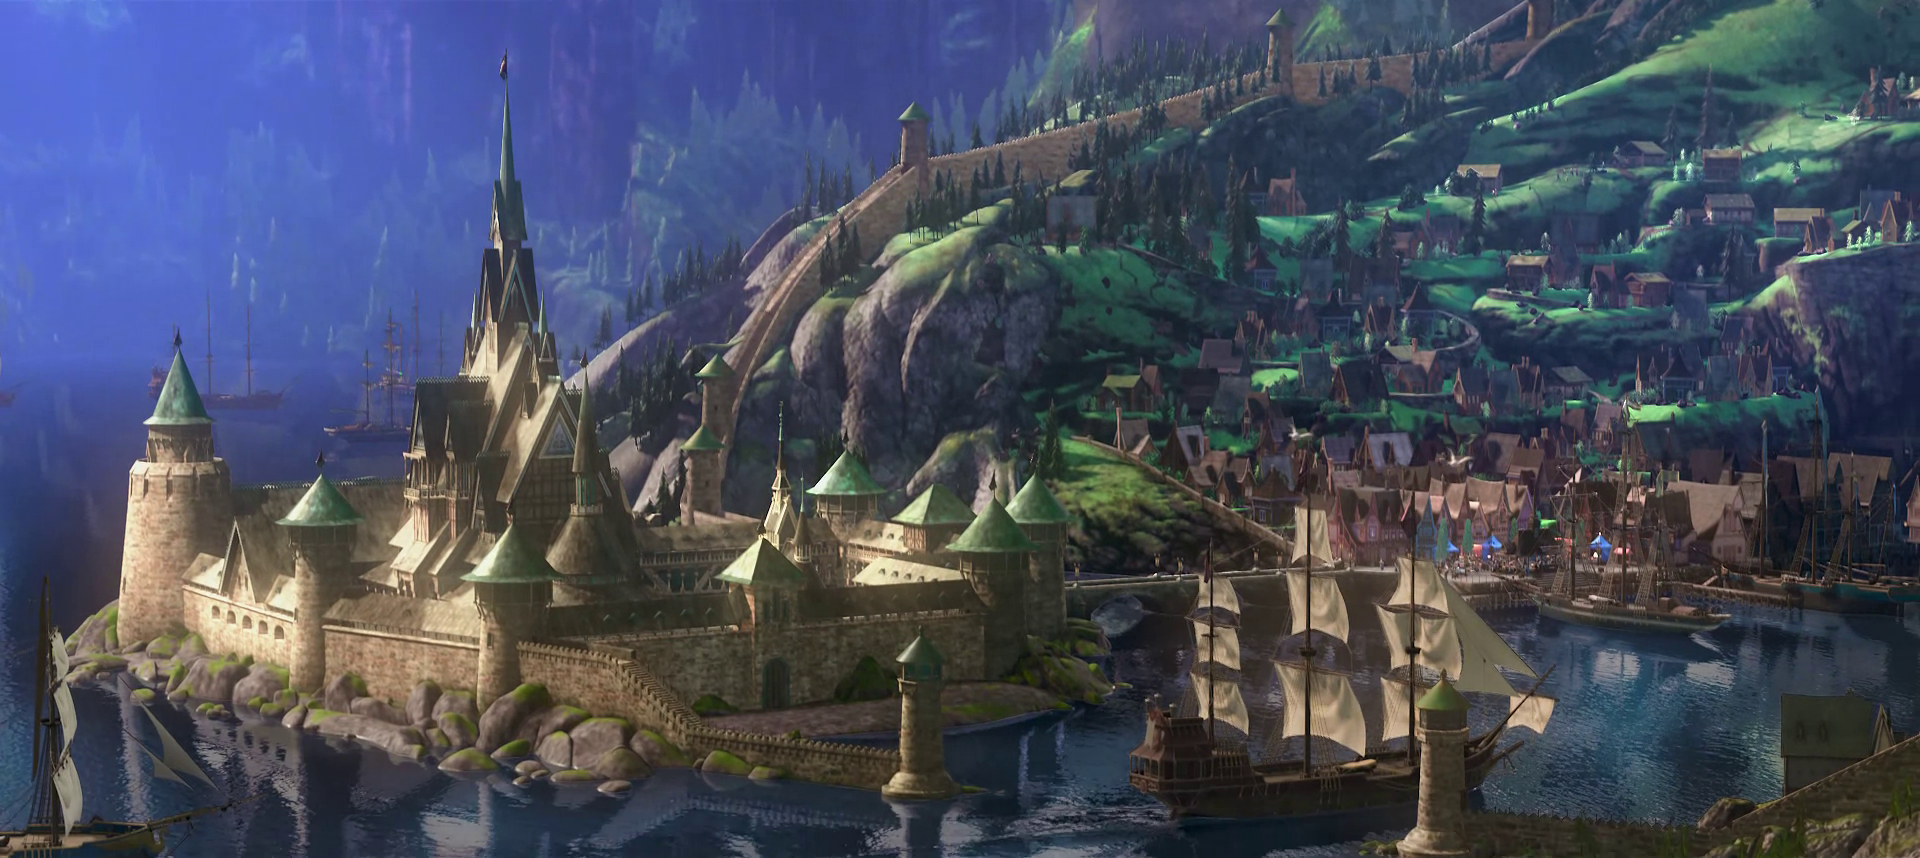 3D Modeling Arendelle Castle from the Disney movie Frozen